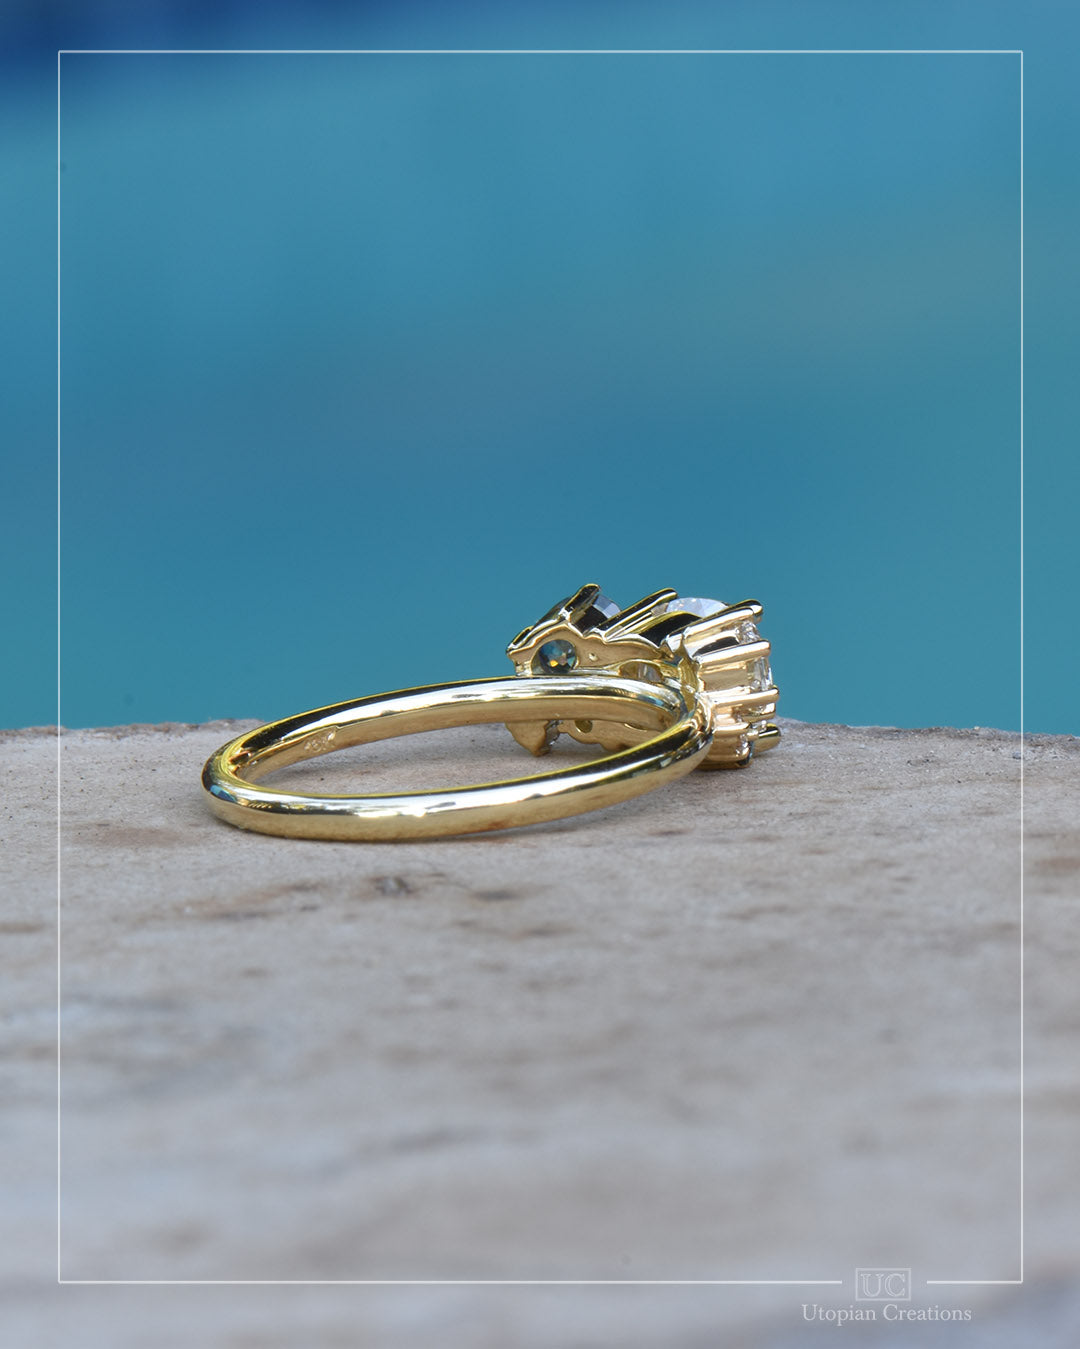 Aciella - Diamond Foundry Lab Diamond and Australian Sapphire Engagement Ring